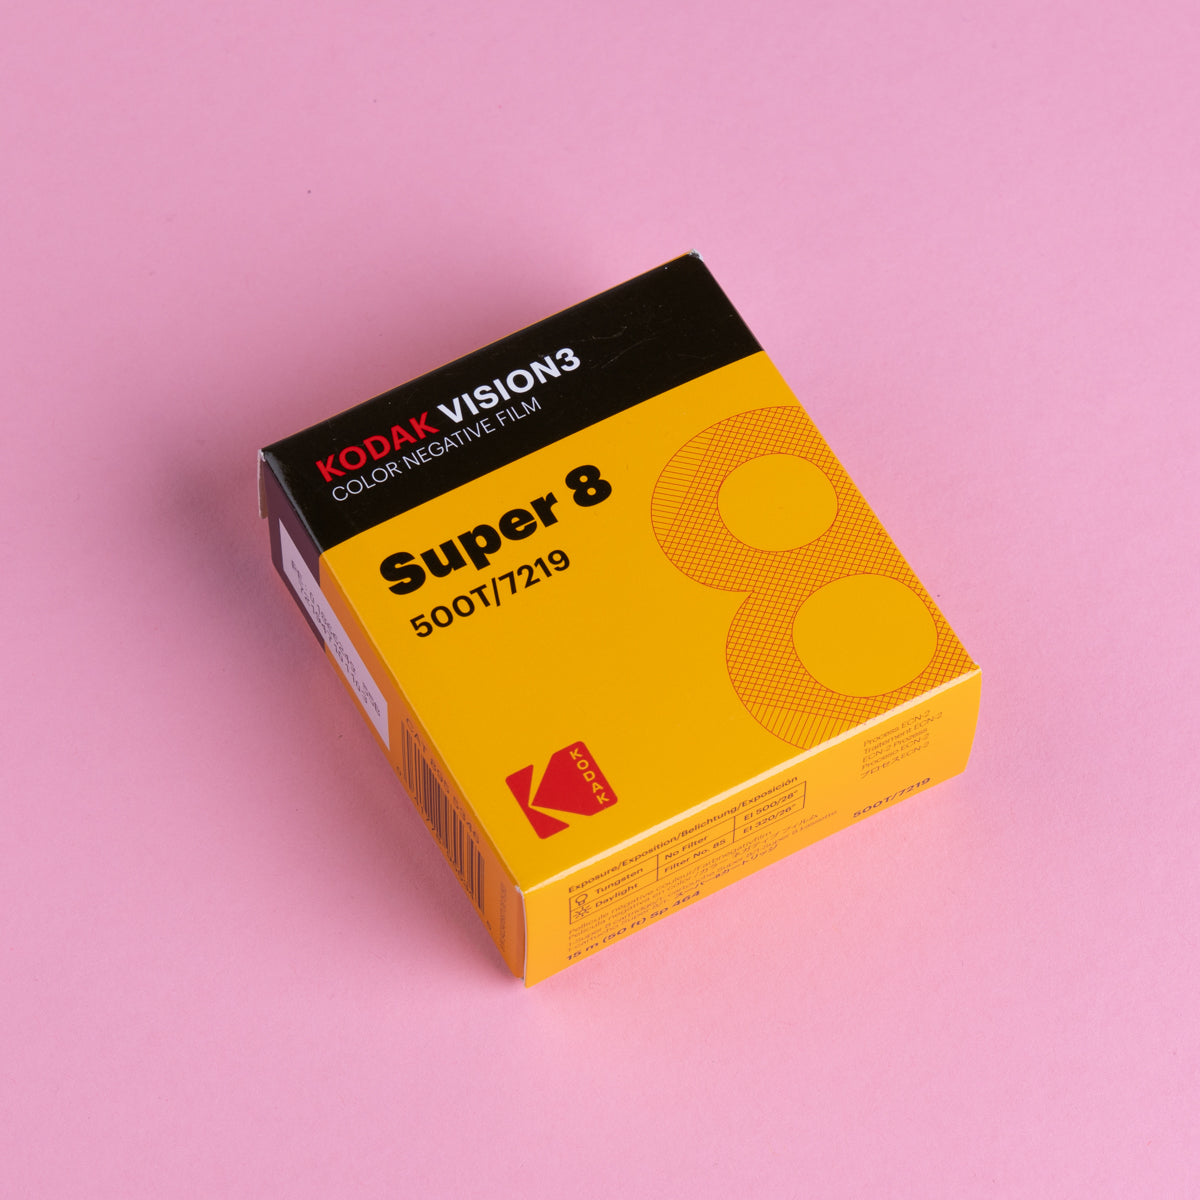 Kodak Super 8 Vision 3 500T (15m/50ft)